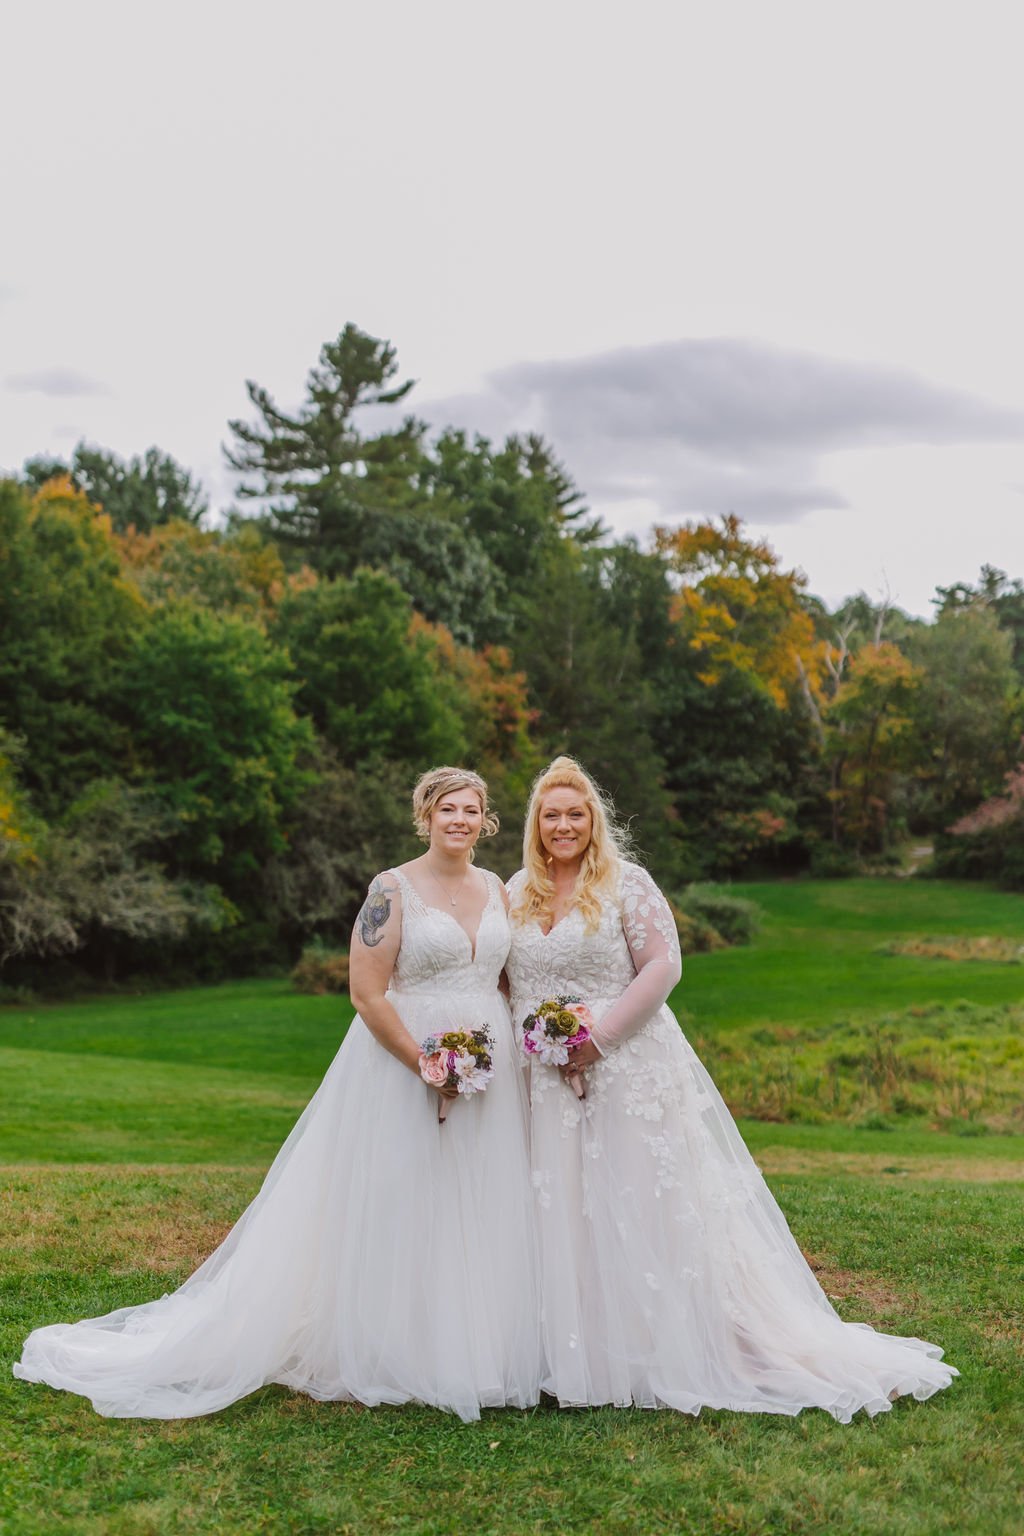 Alex+LaurenWedding-emily tebbetts photography-407 borderland state park queer lesbian LGBTQ intimate wedding elopement boston wedding photographer.jpg